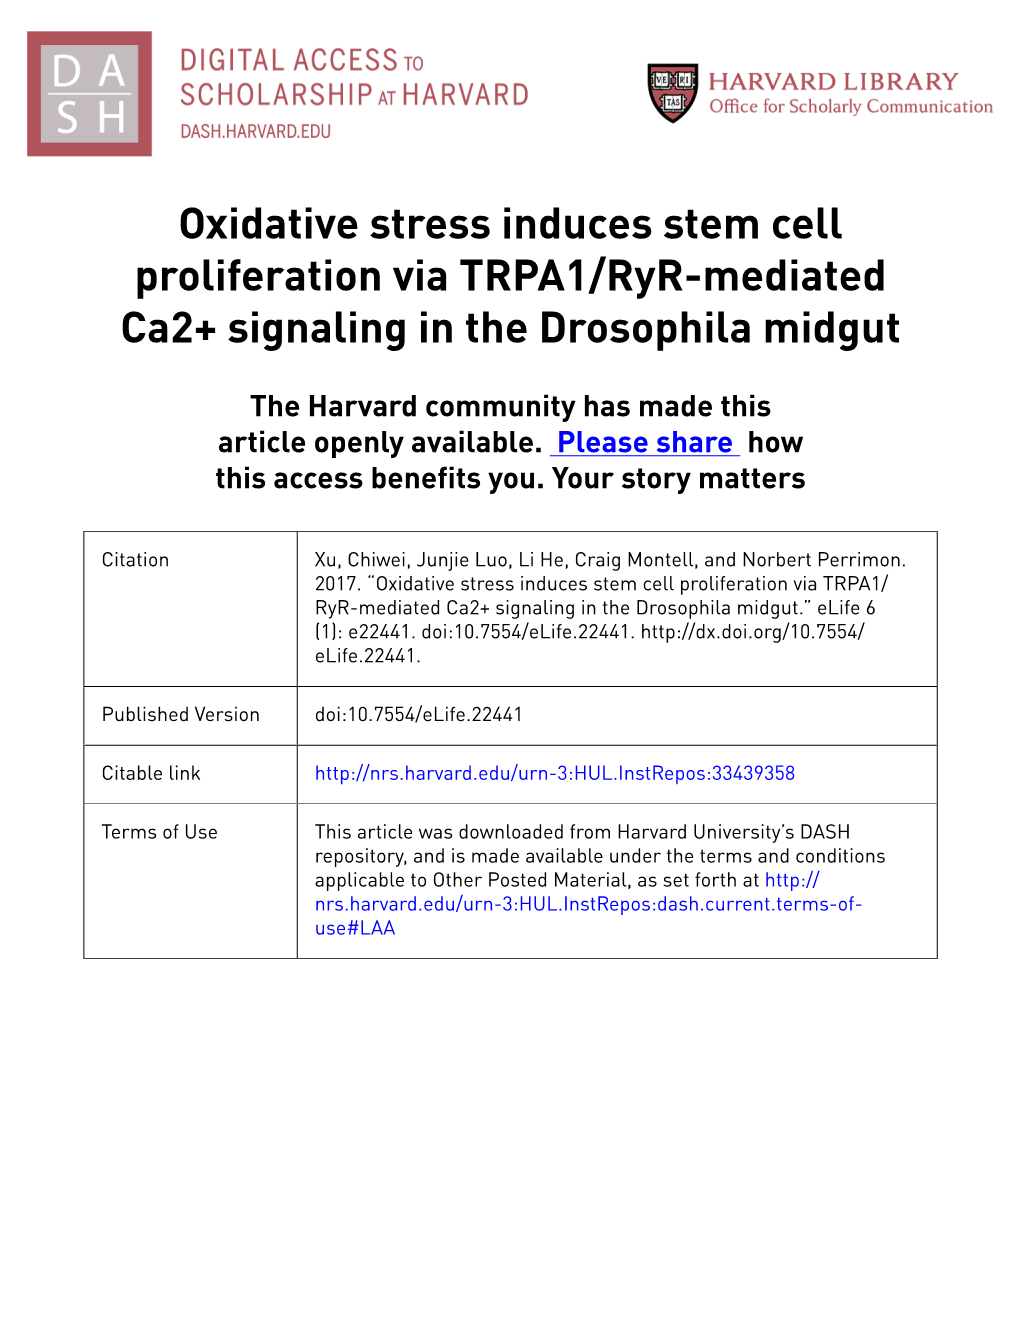 Oxidative Stress Induces Stem Cell Proliferation Via TRPA1/Ryr-Mediated Ca2+ Signaling in the Drosophila Midgut